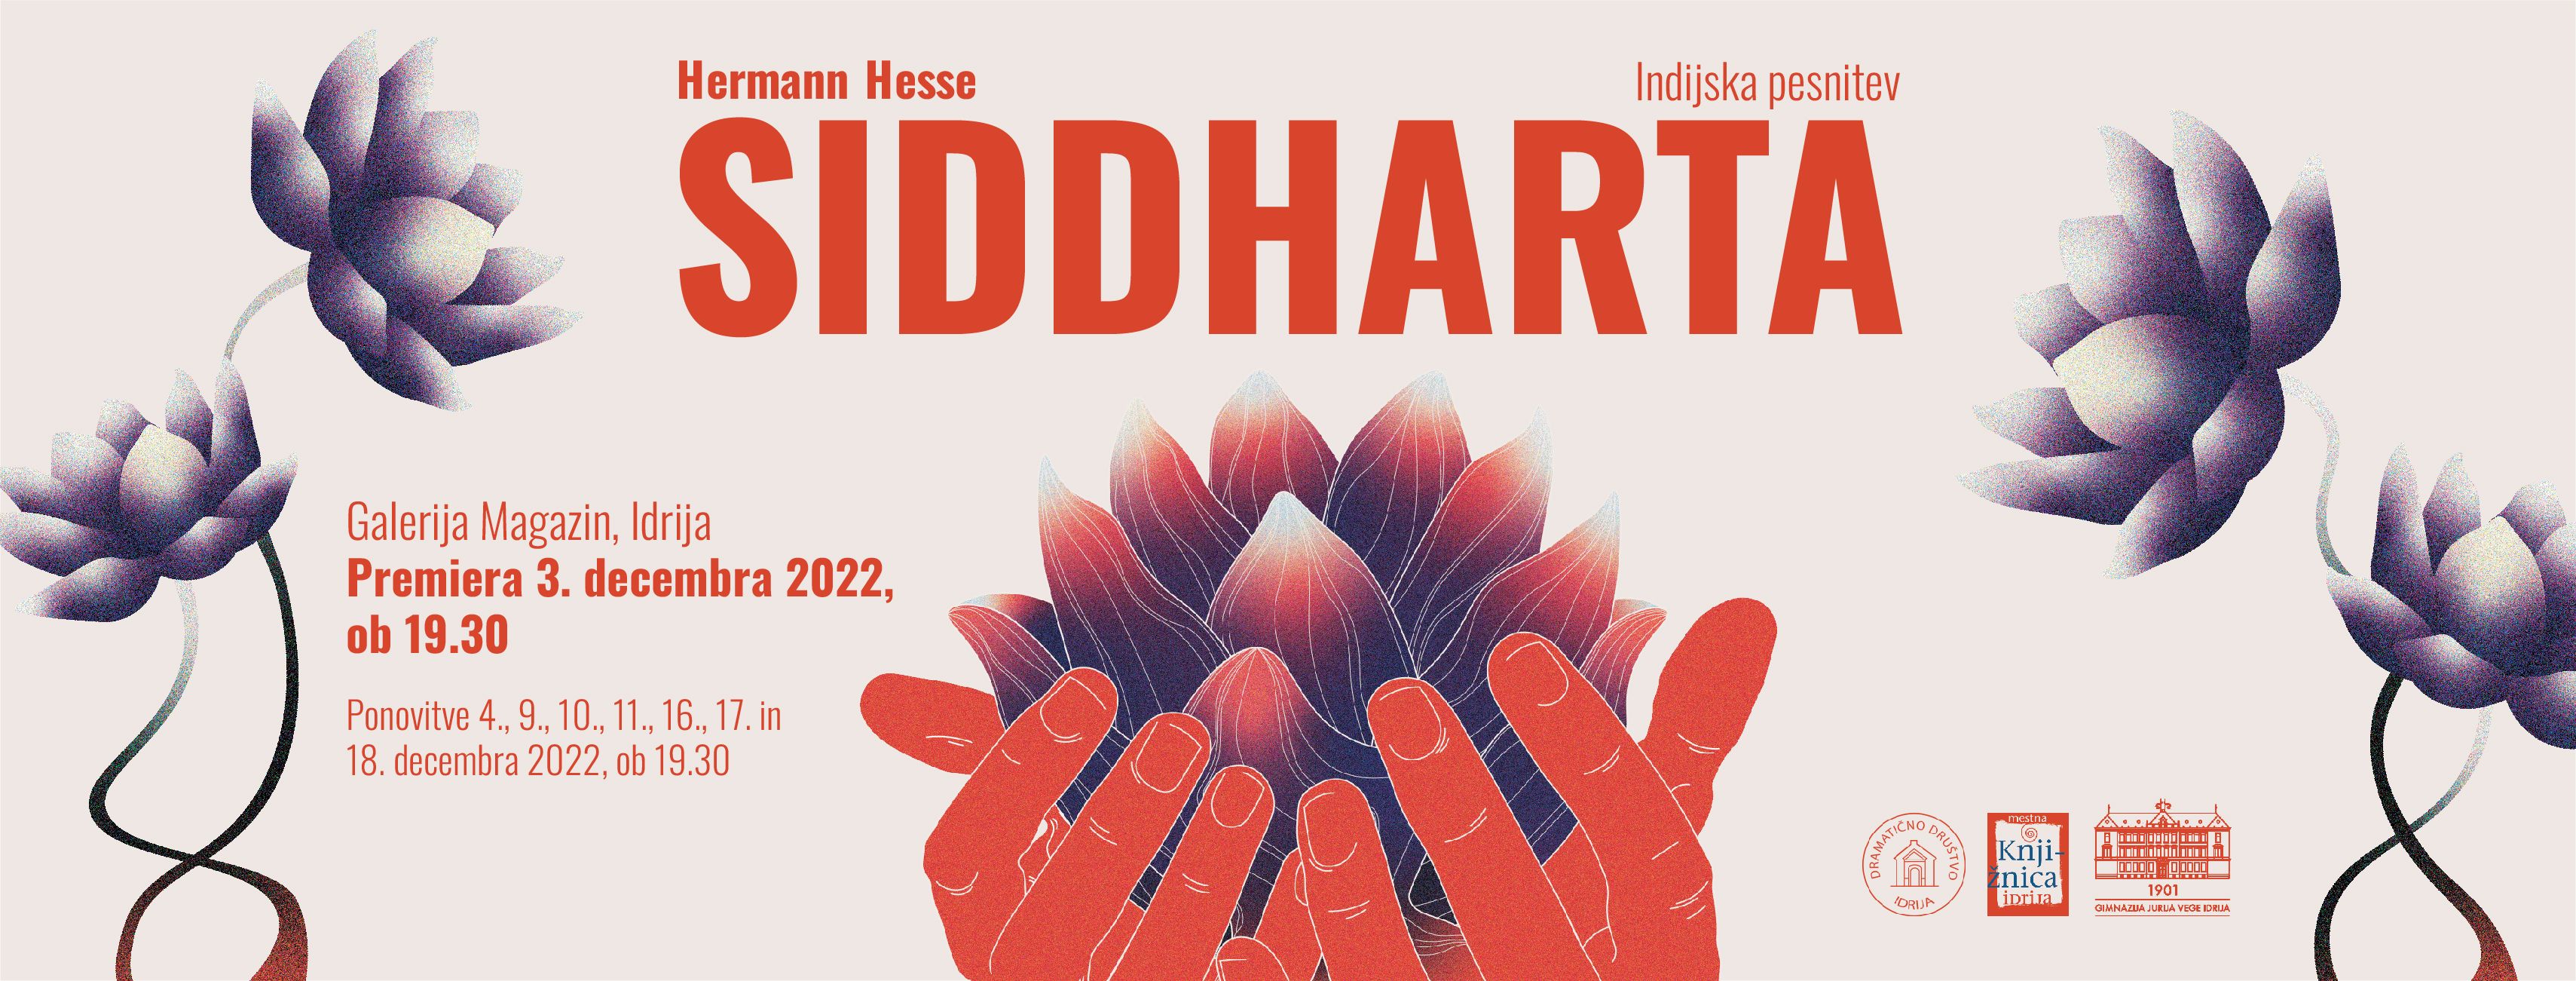 Premiera predstave Siddharta - indijska pesnitev Hermana Hesseja